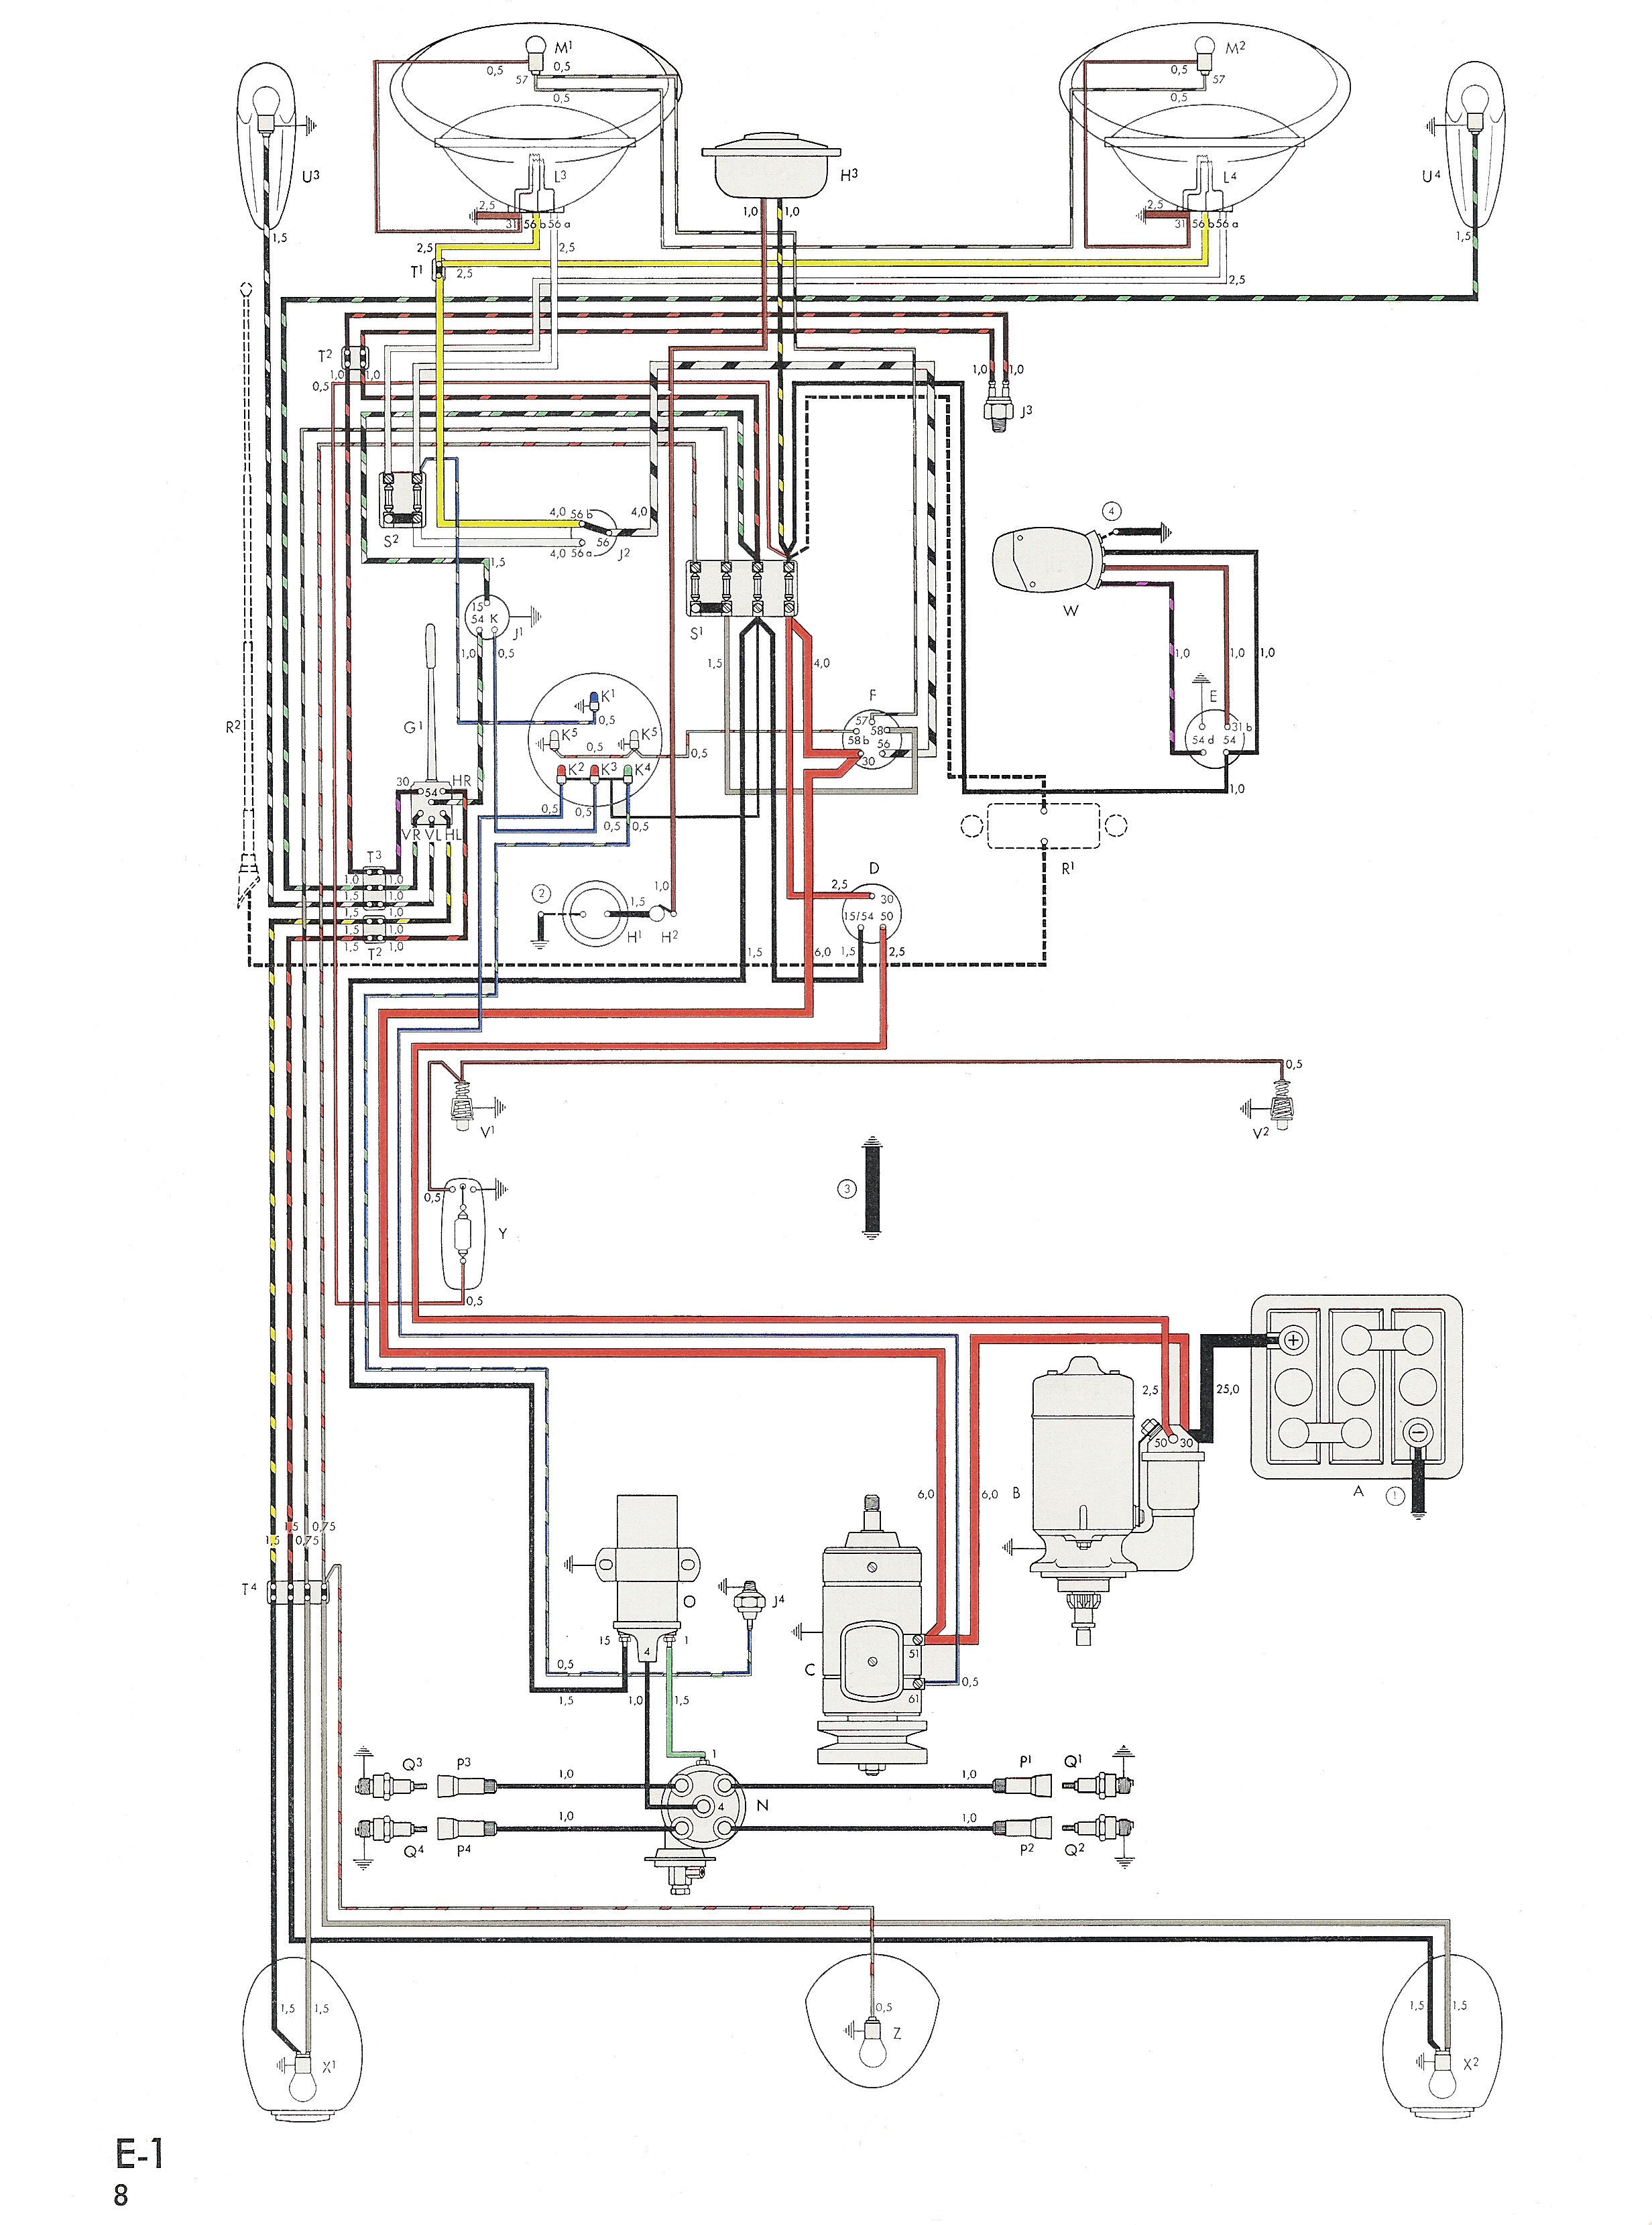 Vw Engine Parts Diagram Wiring Diagram In Addition Vw Beetle Voltage Regulator Wiring Of Vw Engine Parts Diagram